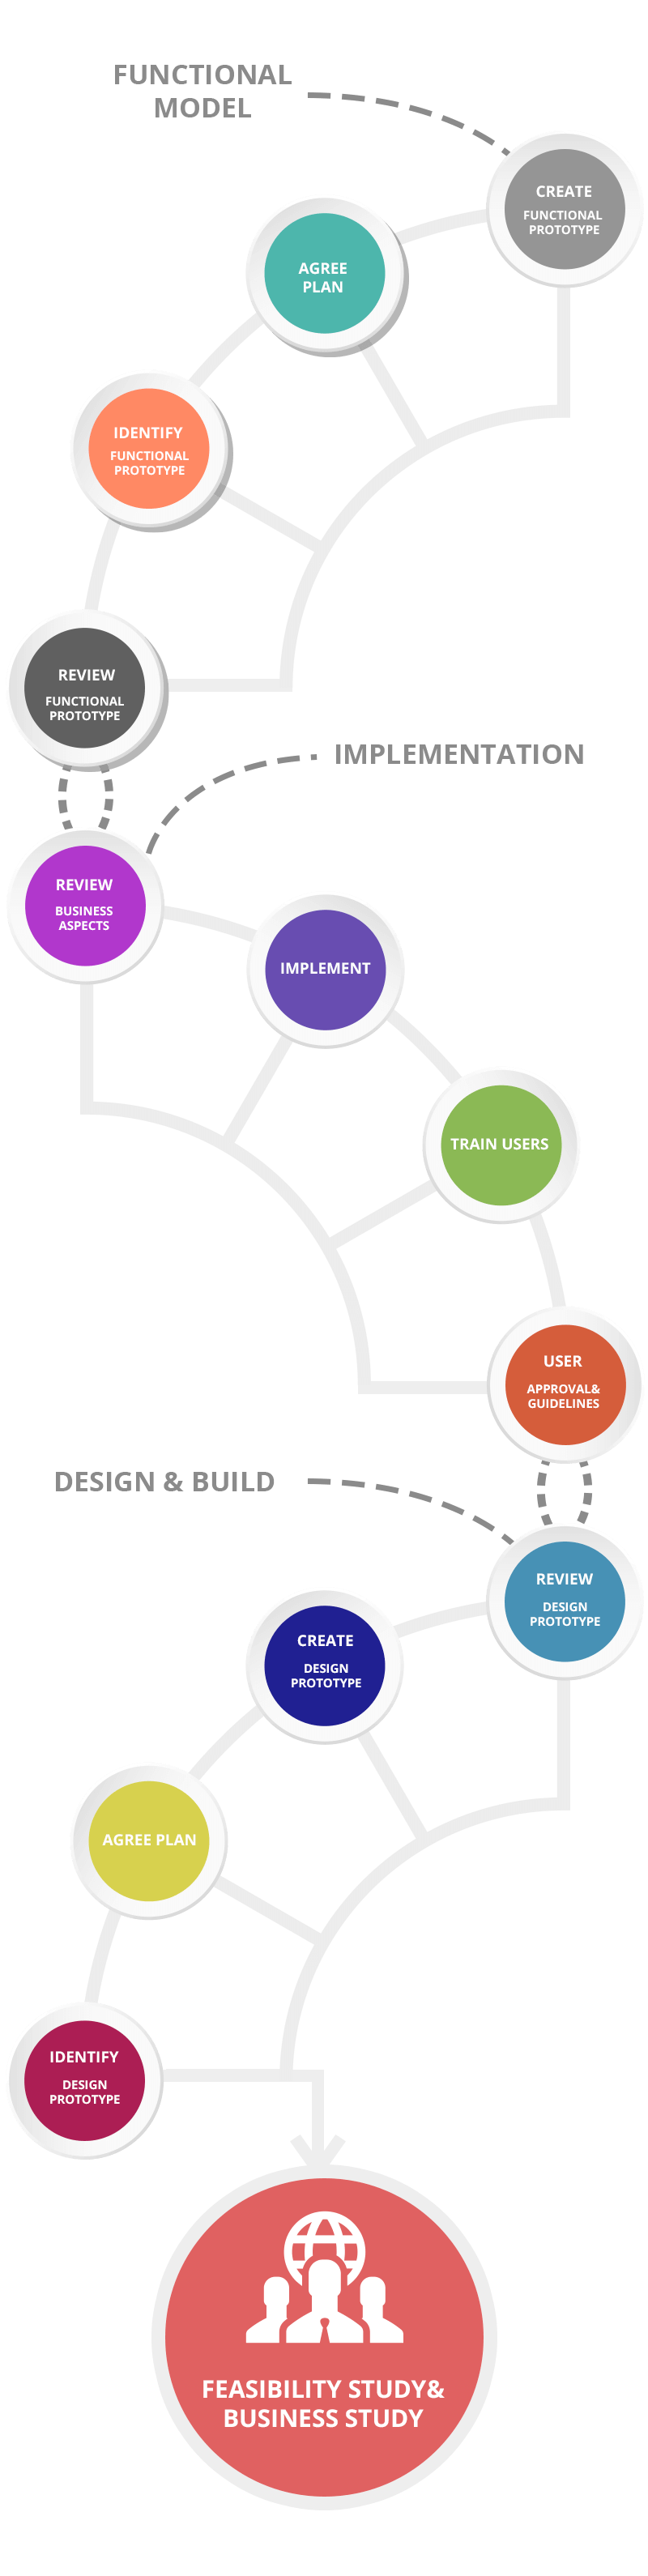 Dynamic Systems Development Model - Software development methodology